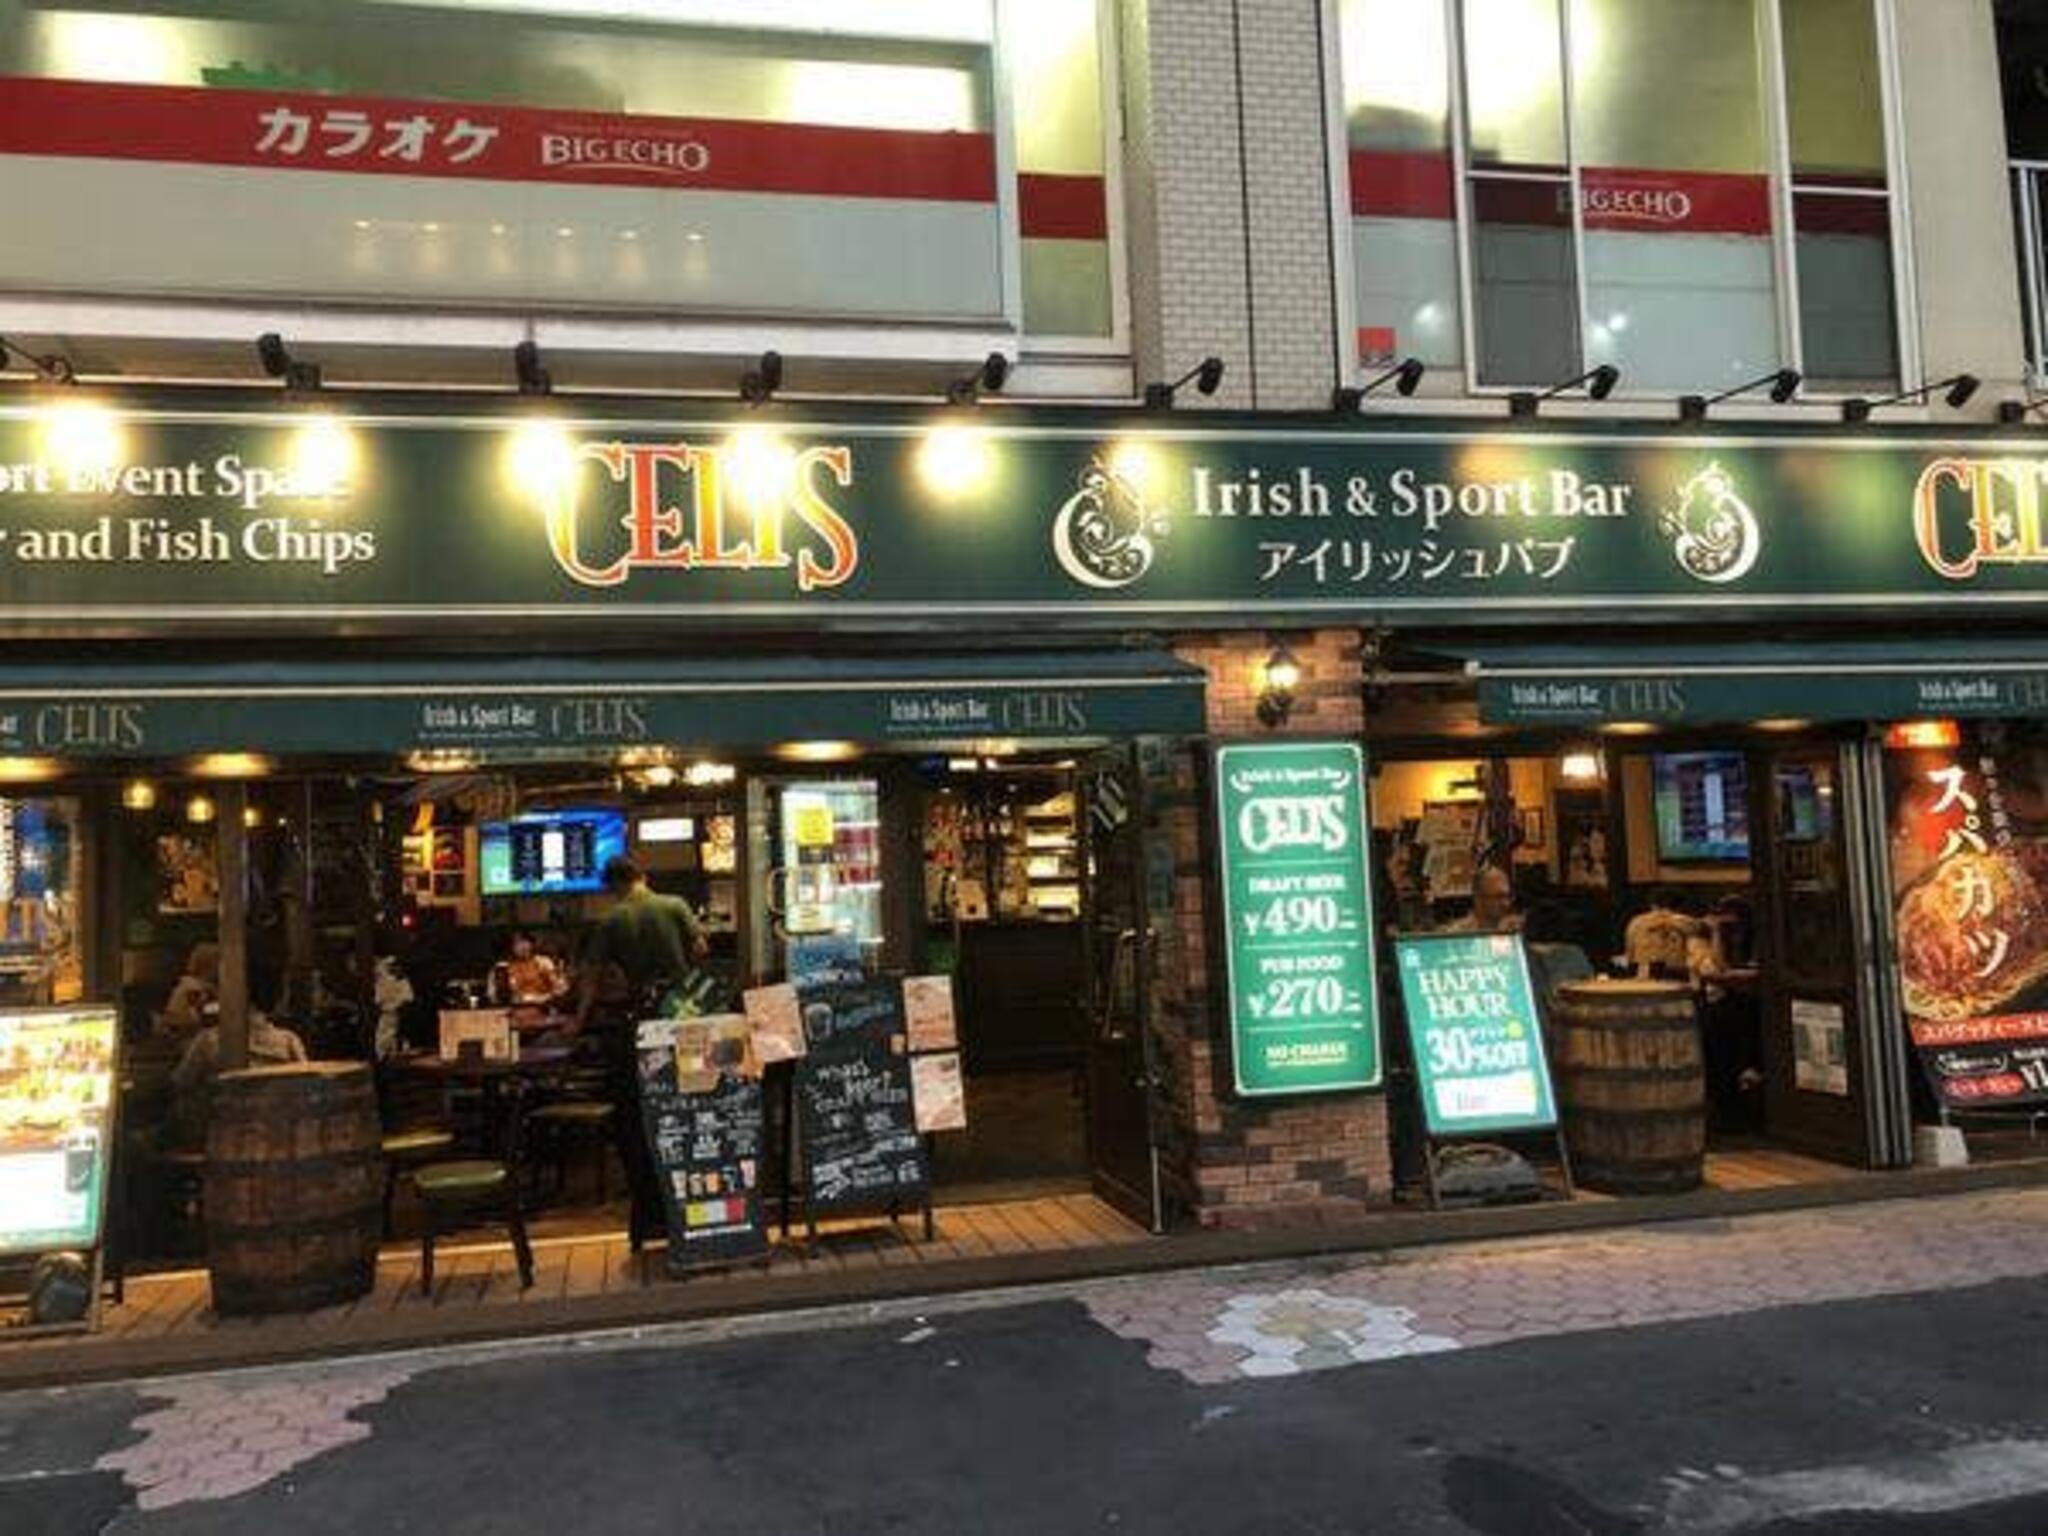 IRISH PUB CELTS 松本駅前店の代表写真8